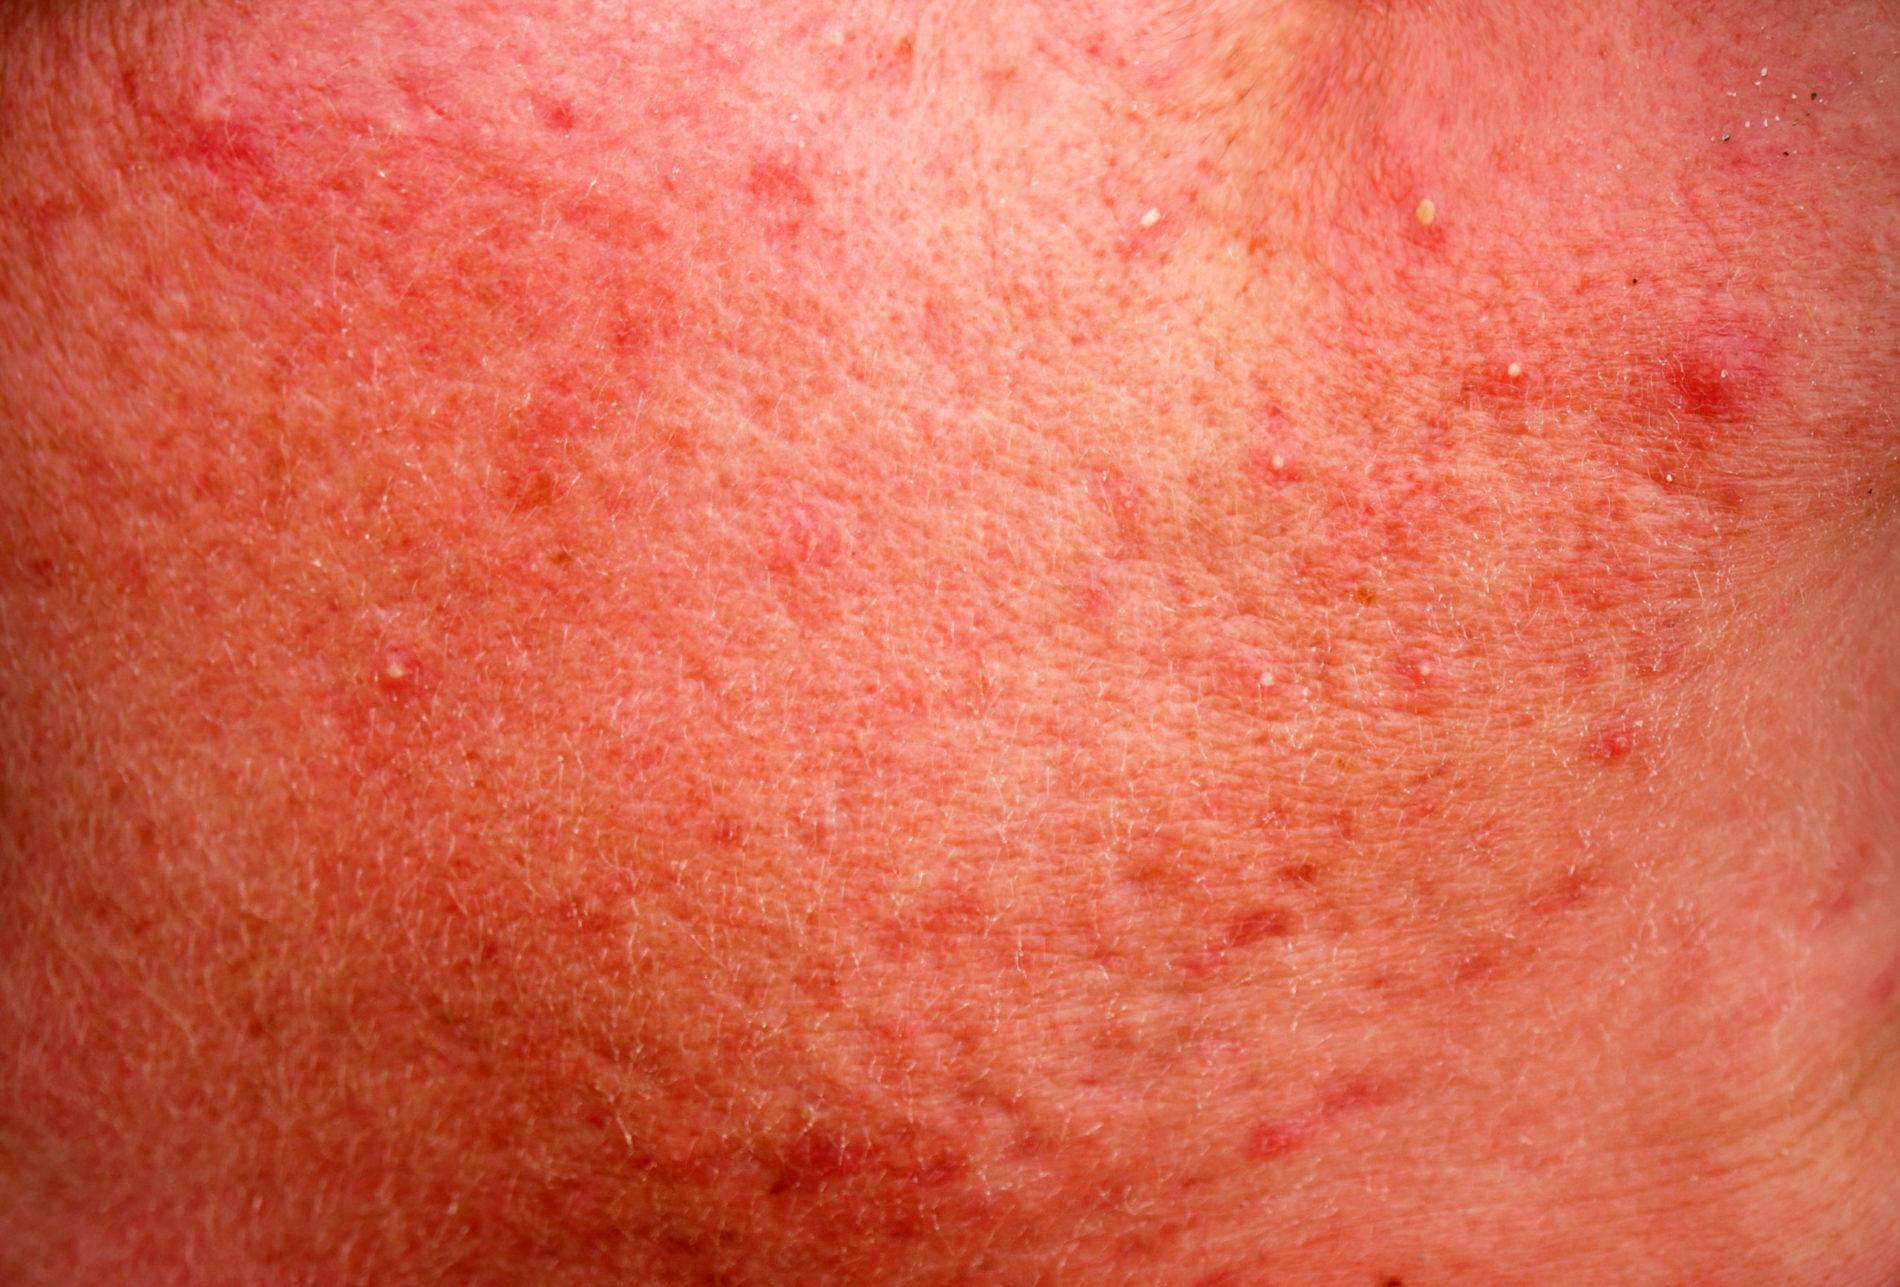 rosacea skin disease on the face Condition Name: Acne Rosacea Source: Selfology Skincare Guide selfology.co/Skincare